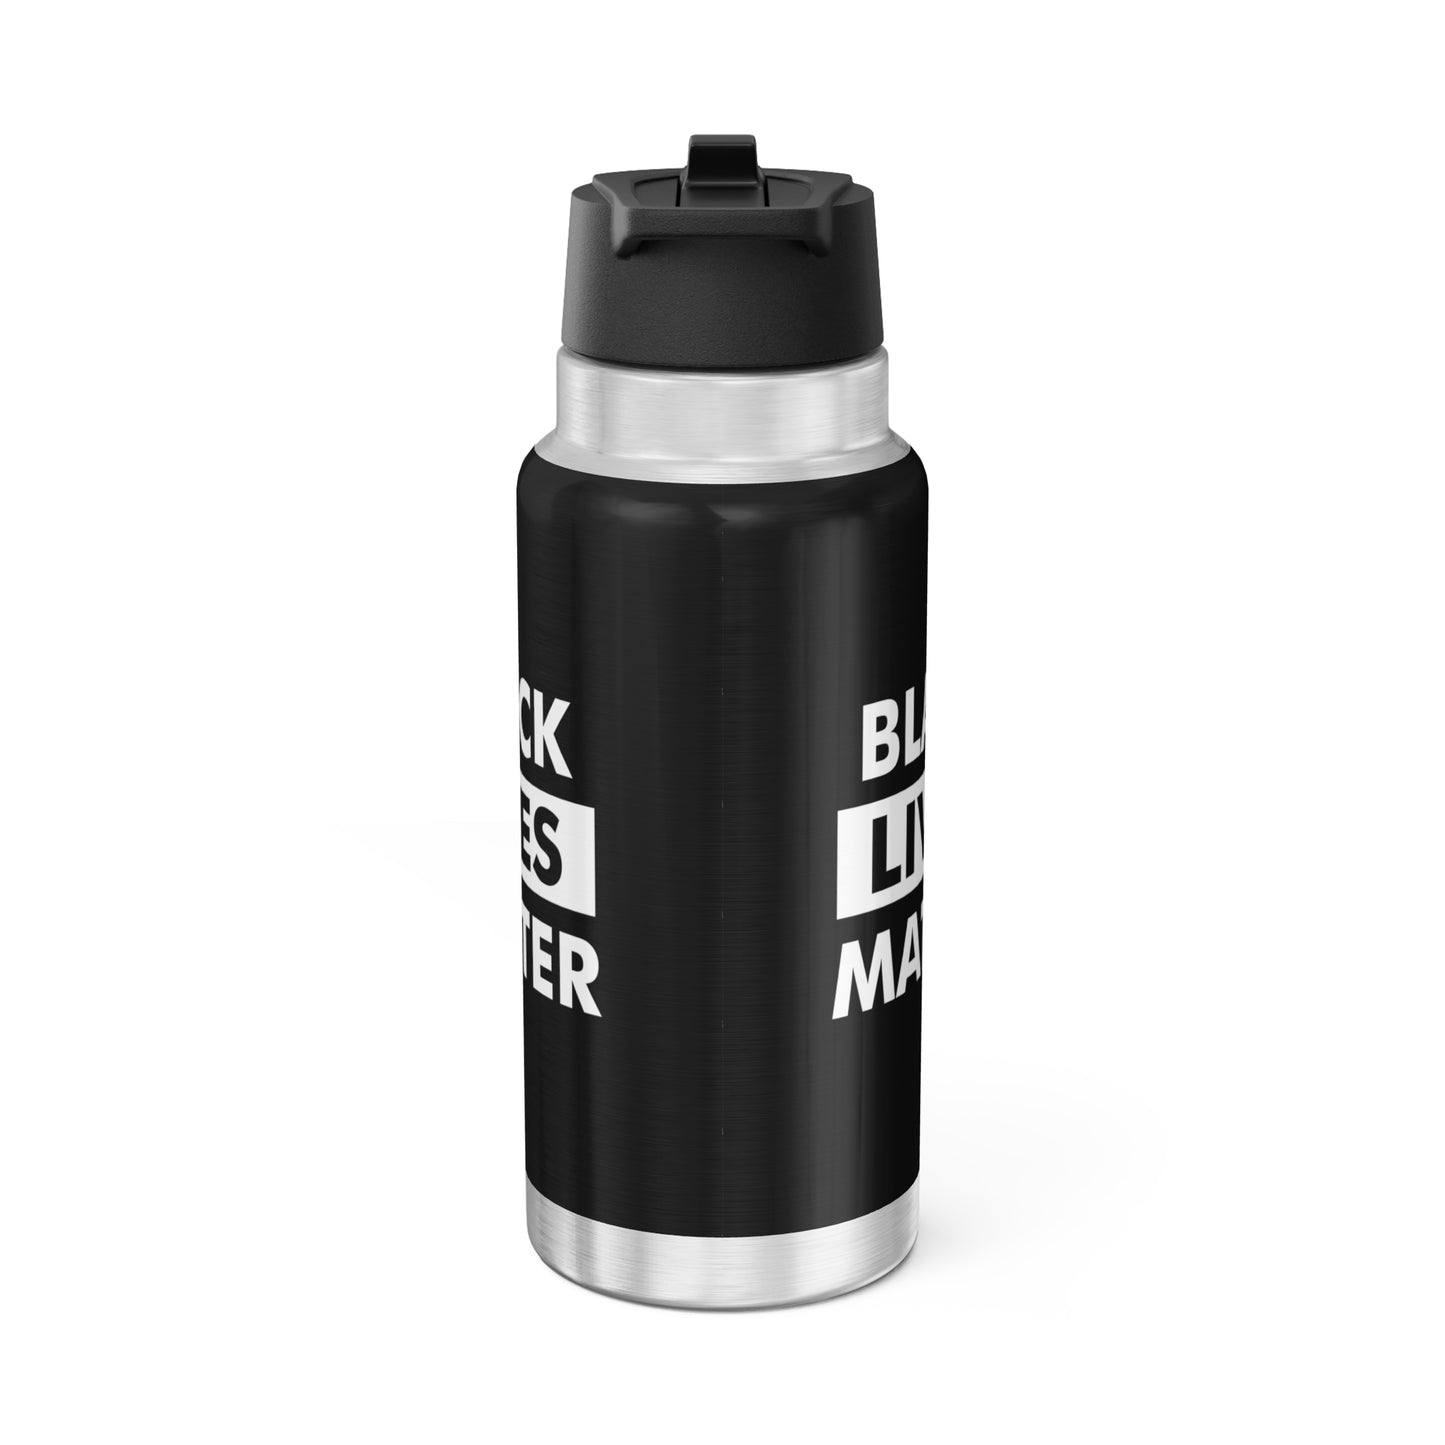 “Black Lives Matter” 32 oz. Tumbler/Water Bottle